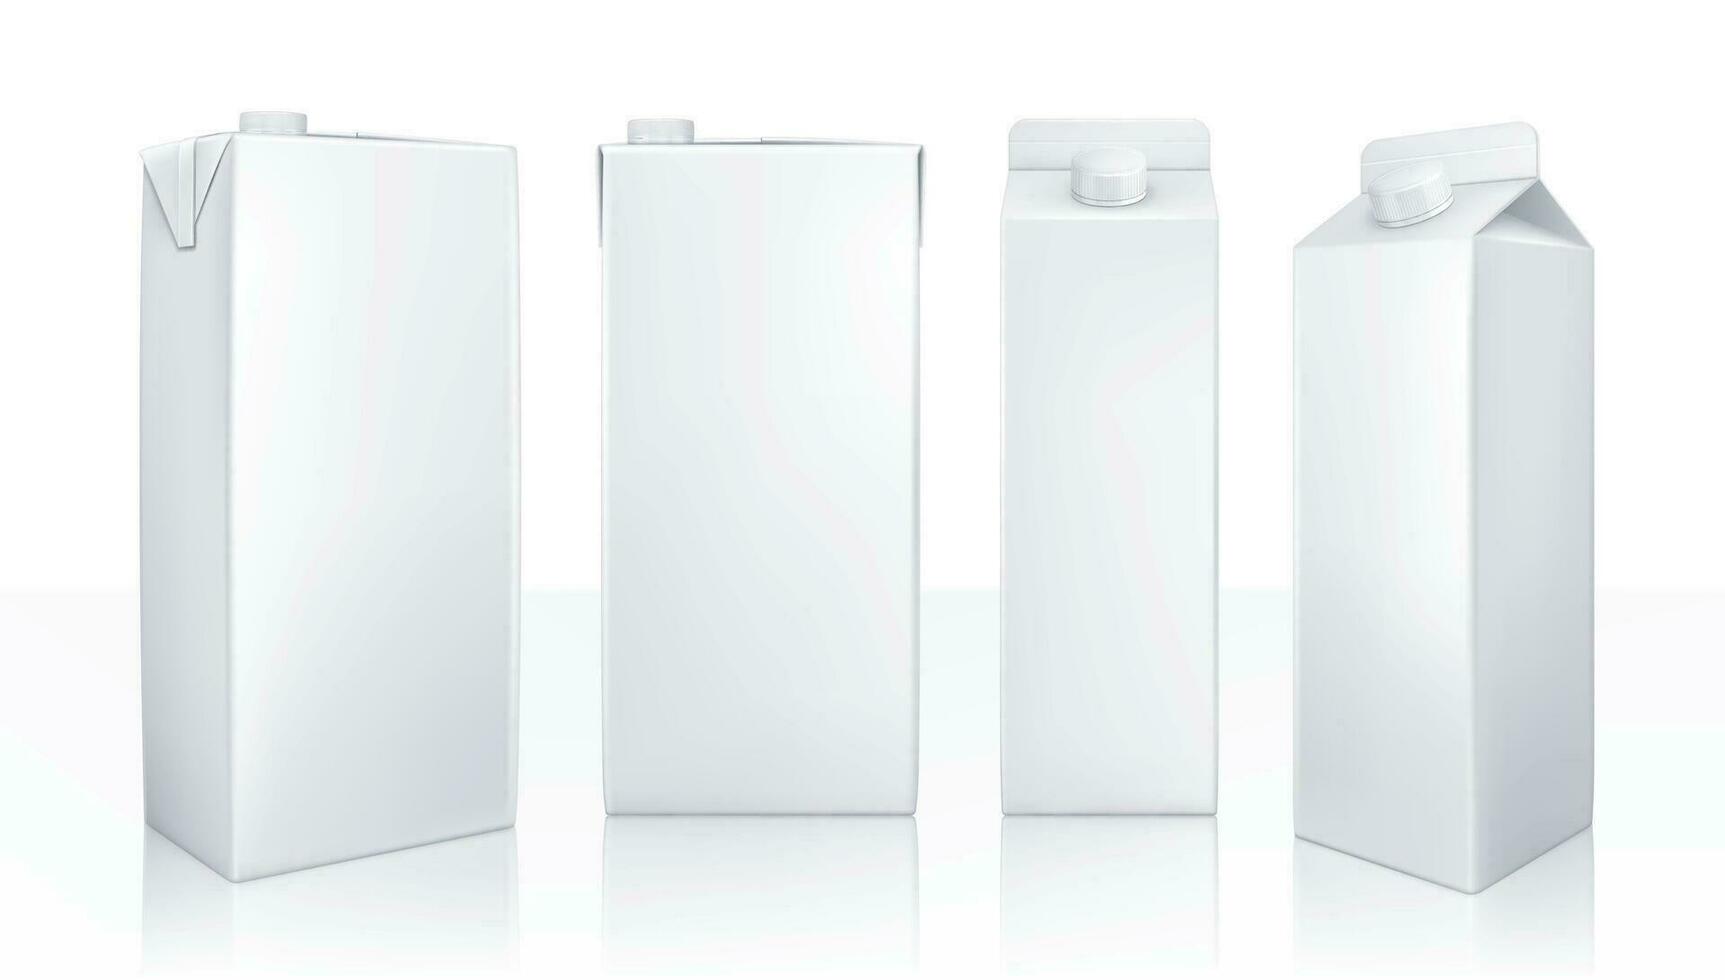 Realistic Detailed 3d Blank Juice or Milk Pack Template Set. Vector